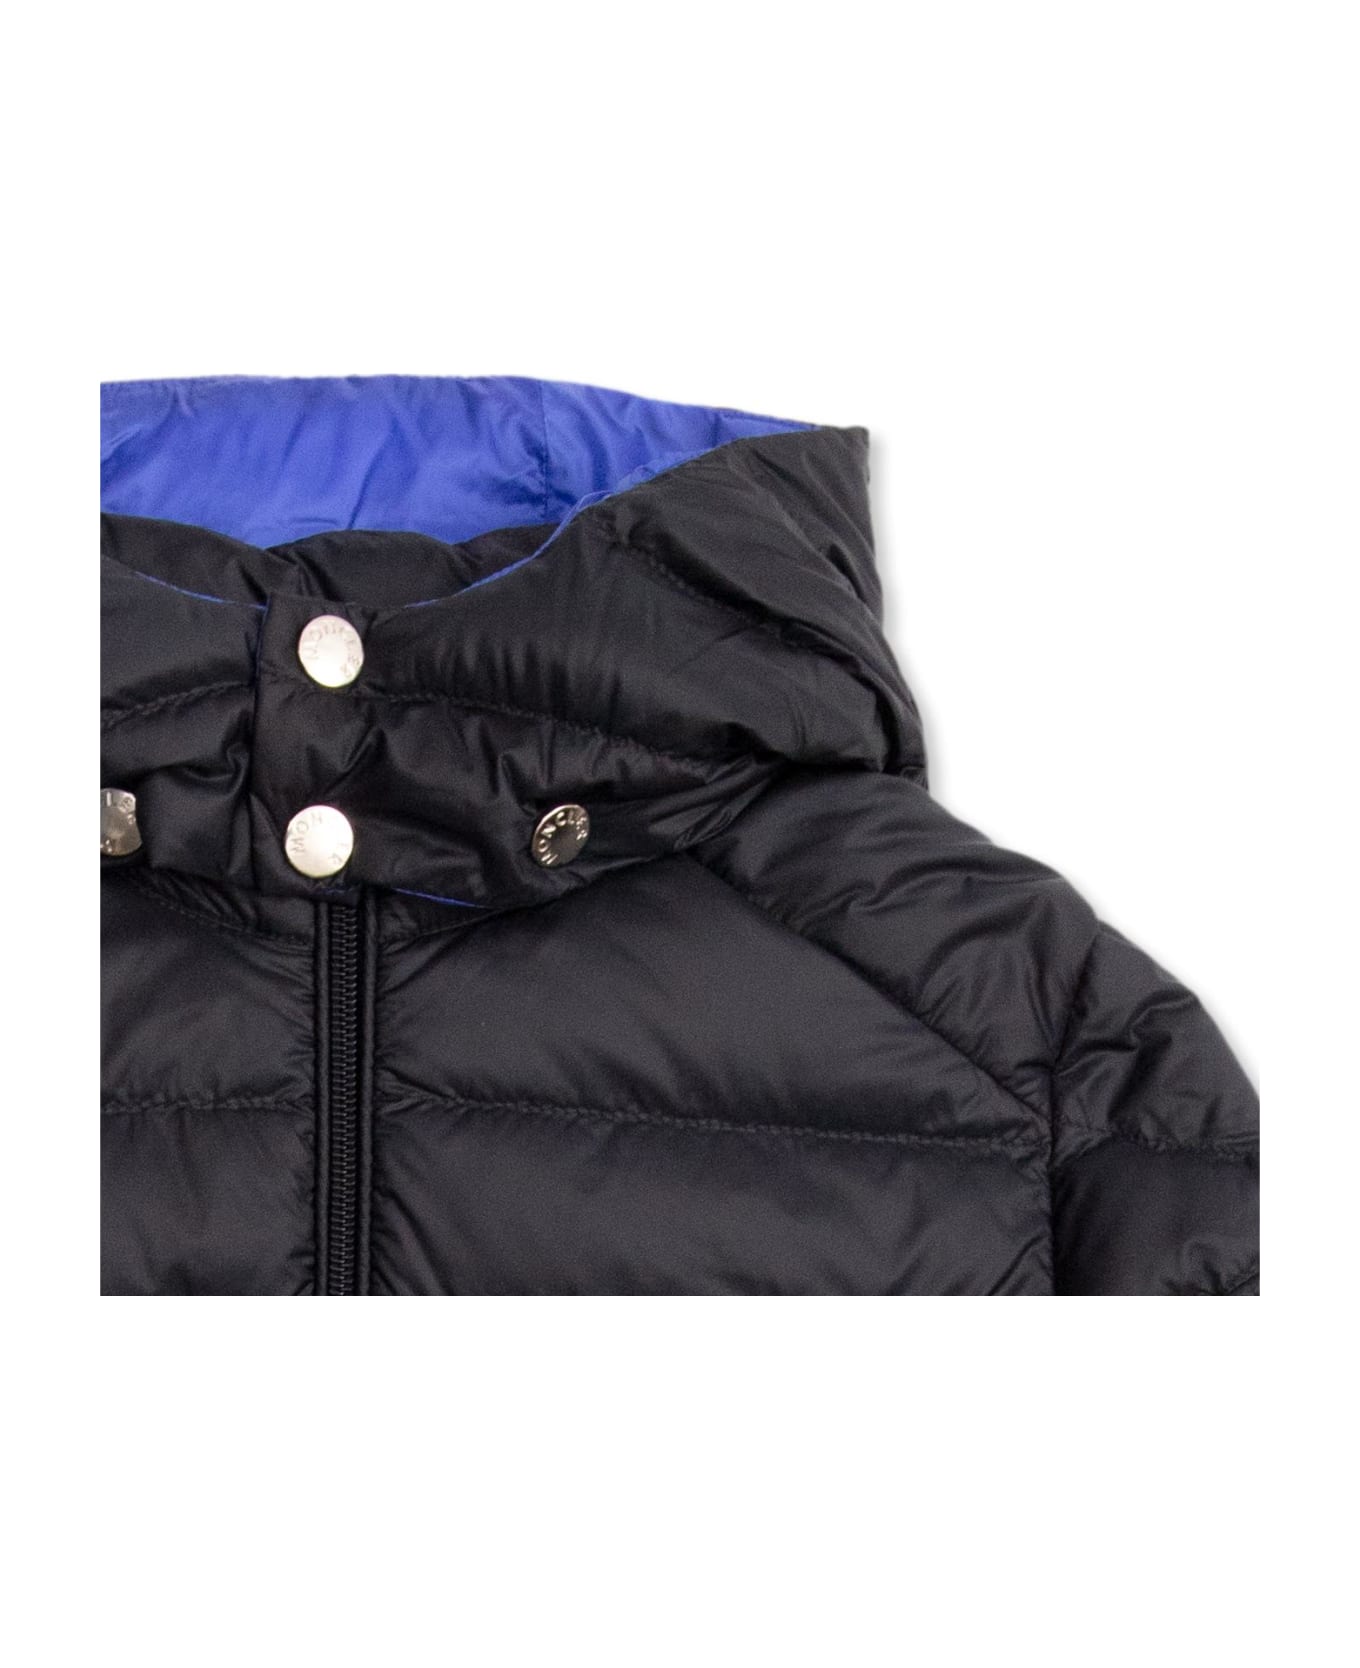 Moncler Enfant Jacket With Detachable Hood - Blu